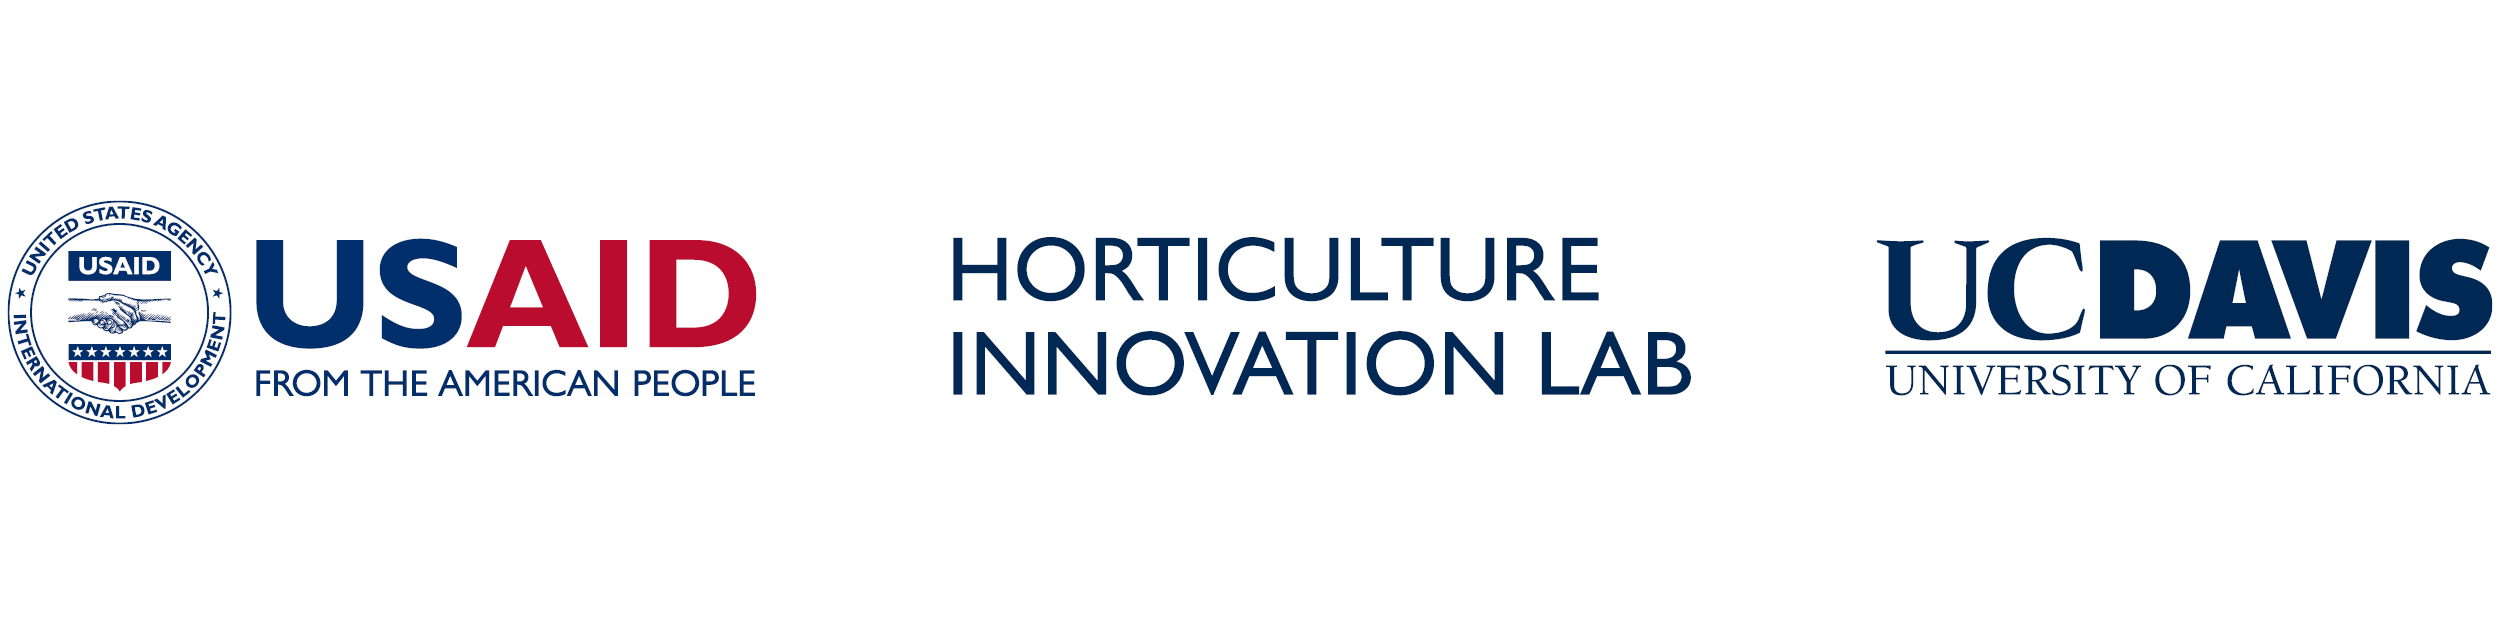 Horticulture Innovation Lab logo - USAID - UC Davis